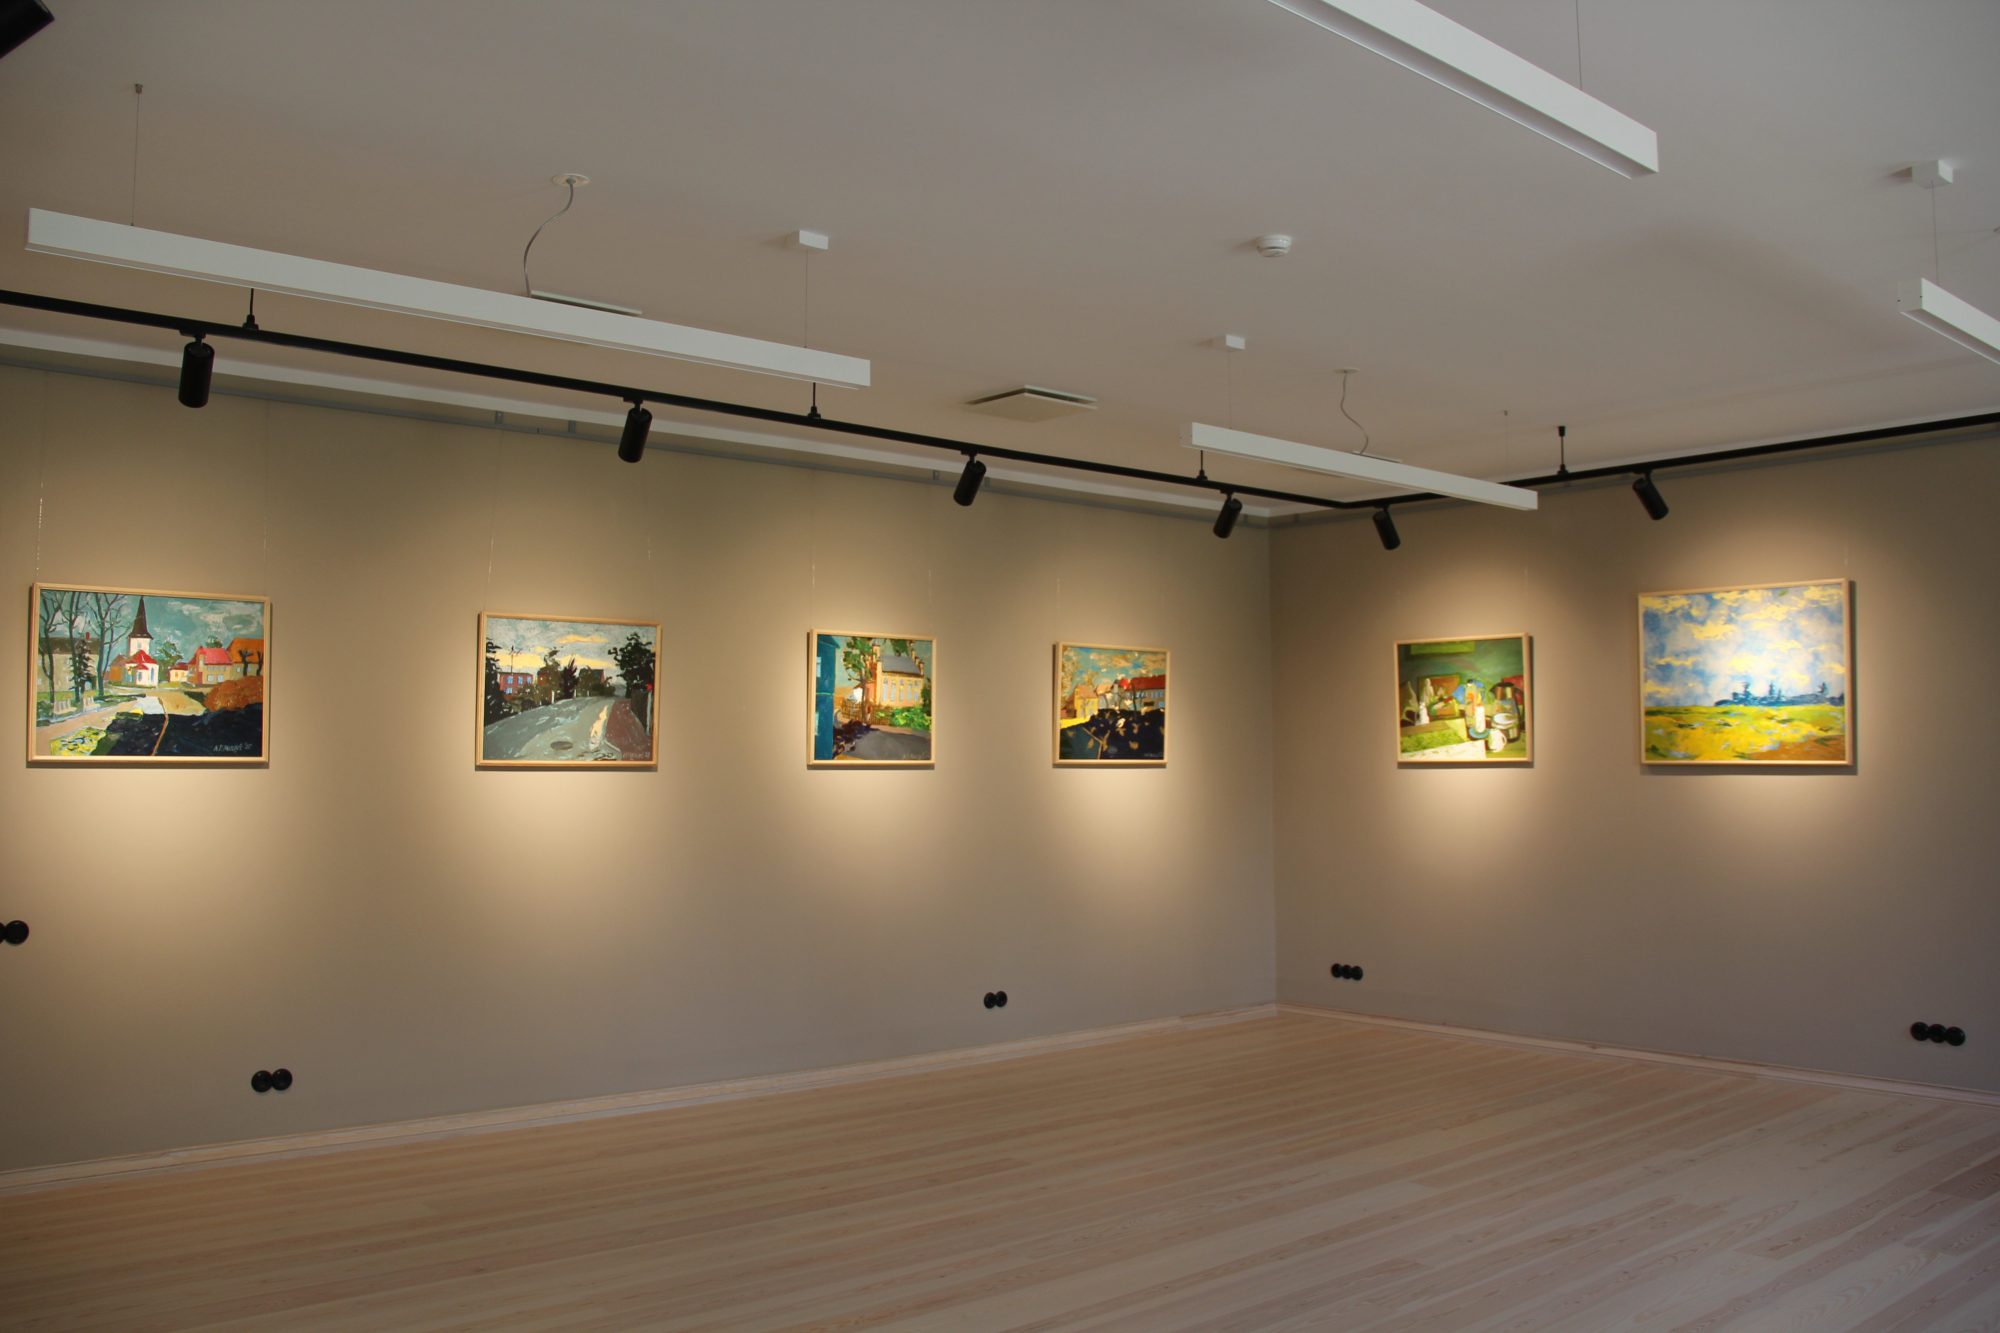 Exhibition “Landscapes of Tukums” by Alberta Pauliņš